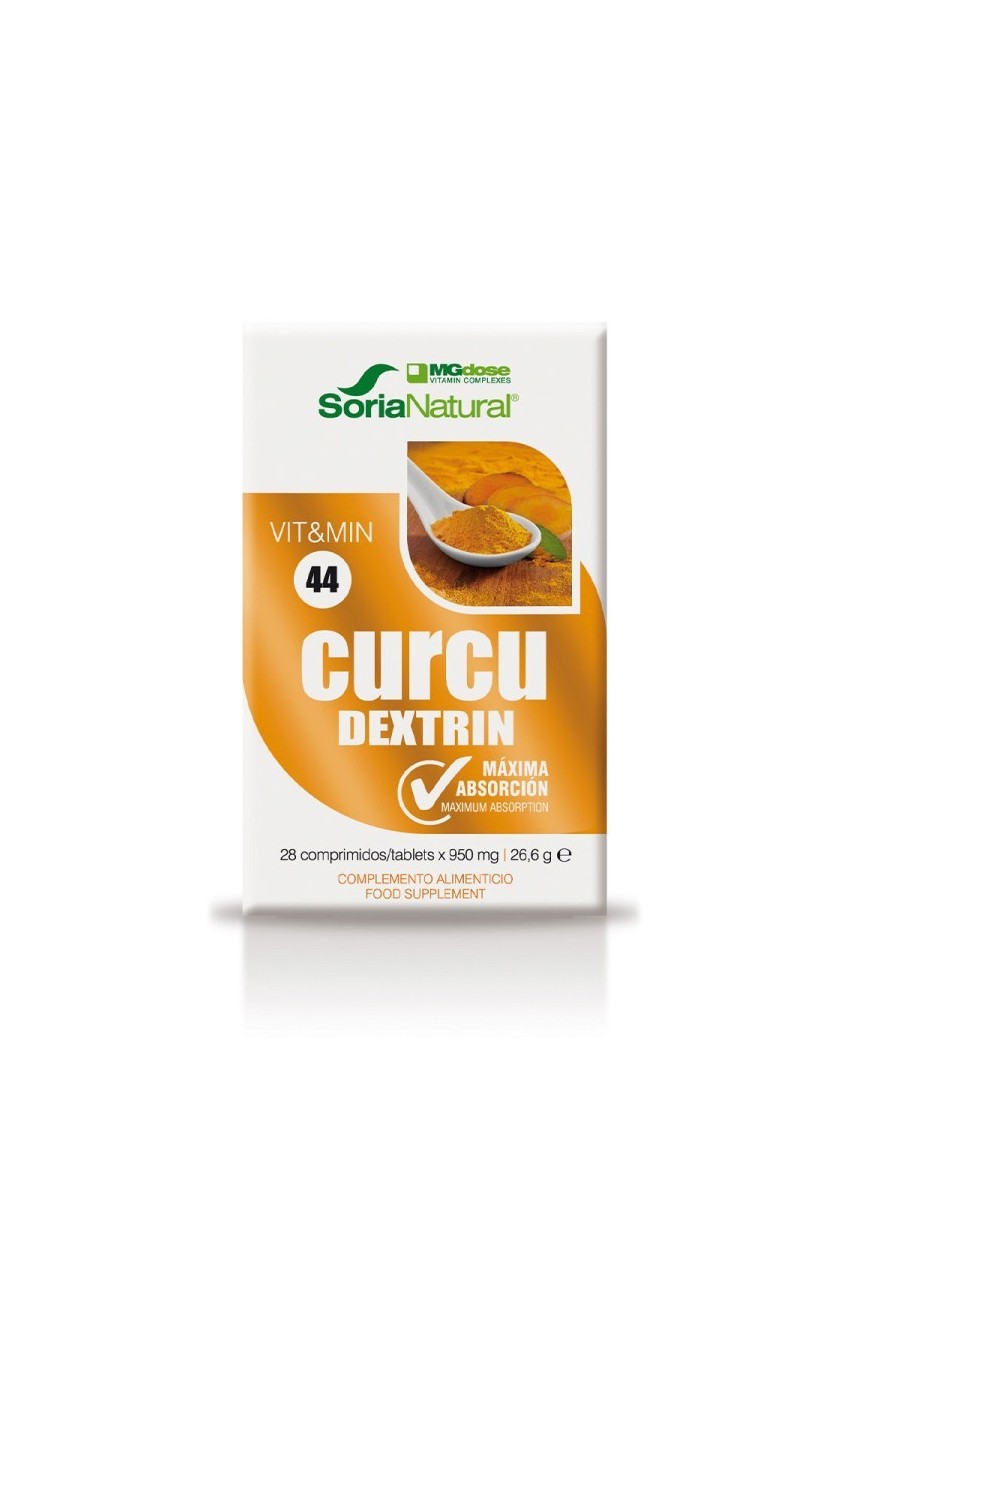 Mgdose Curcu Dextrin